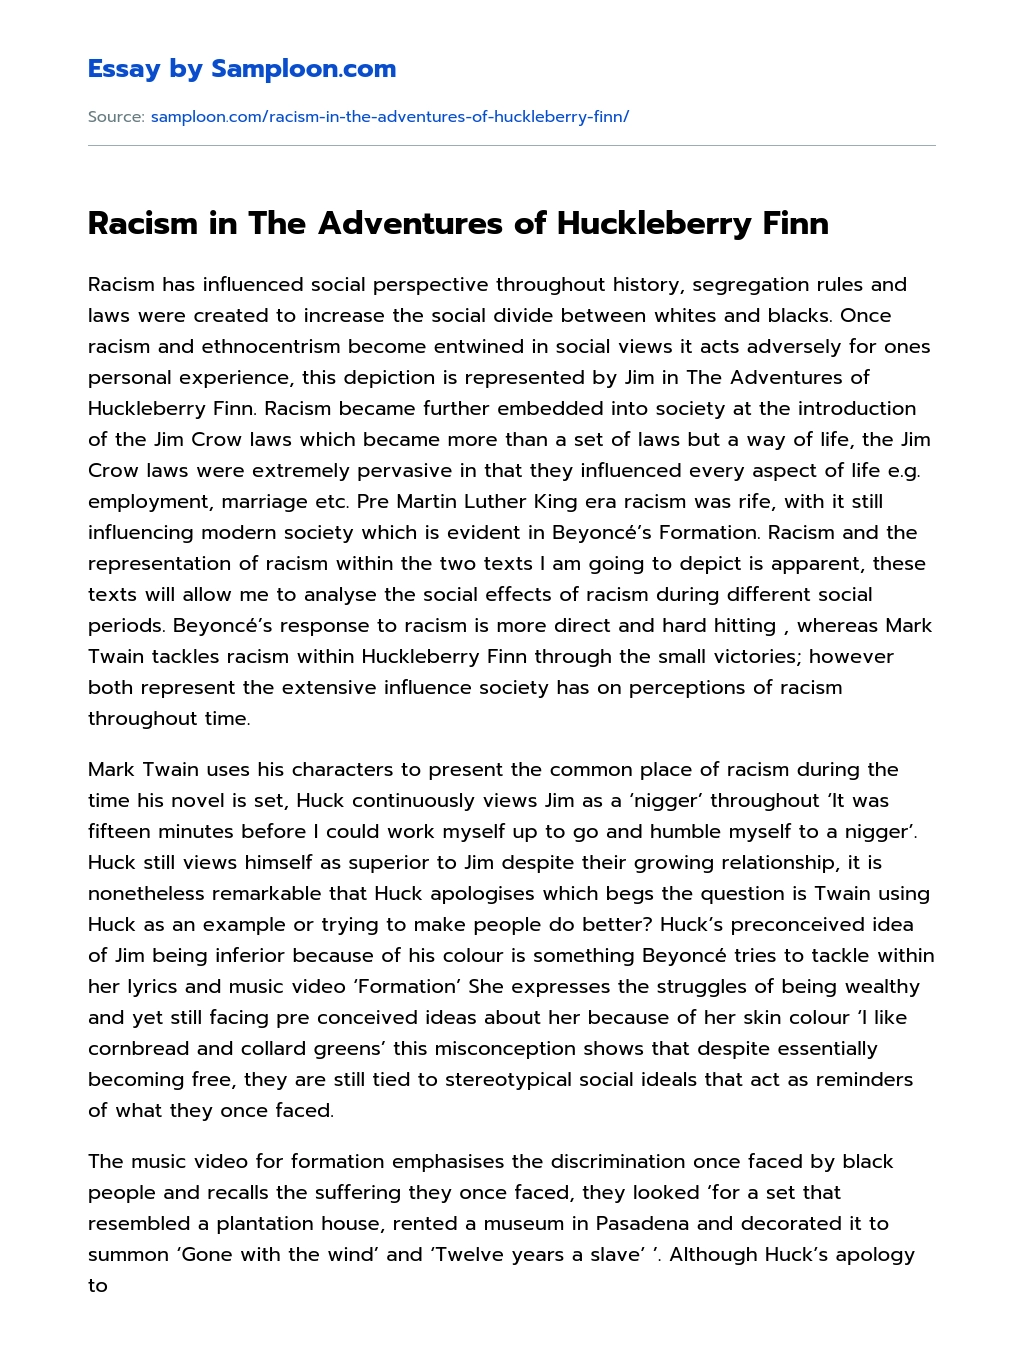 Racism in The Adventures of Huckleberry Finn Summary essay